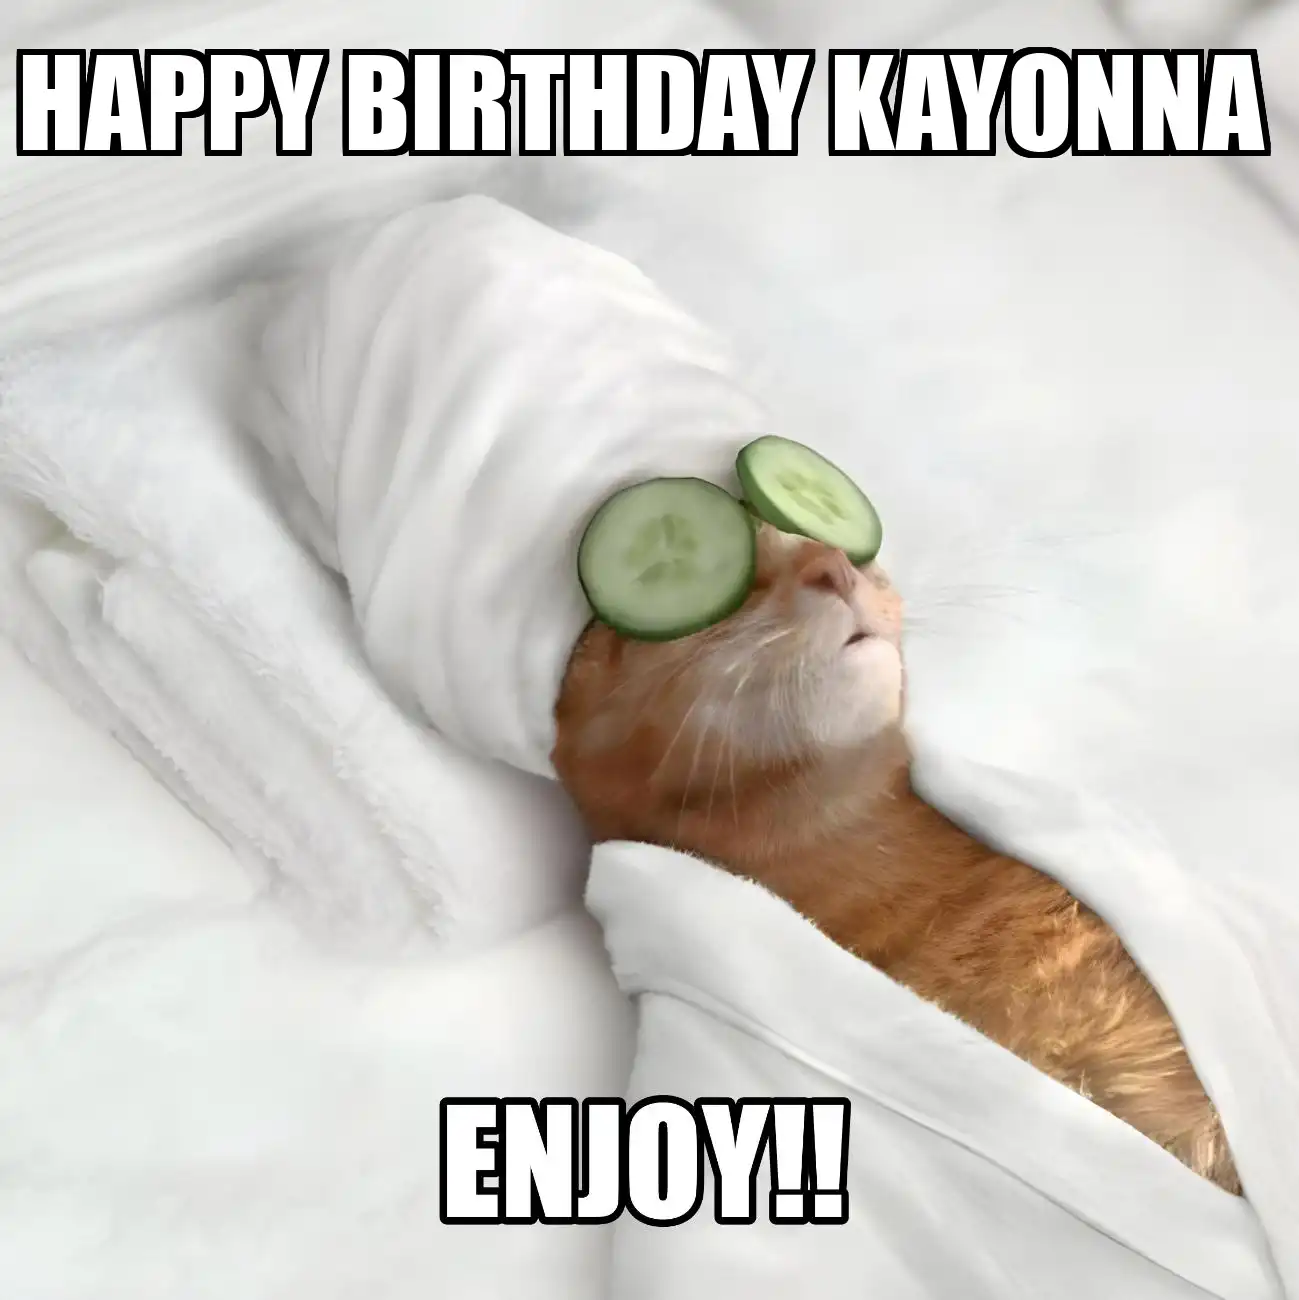 Happy Birthday Kayonna Enjoy Cat Meme